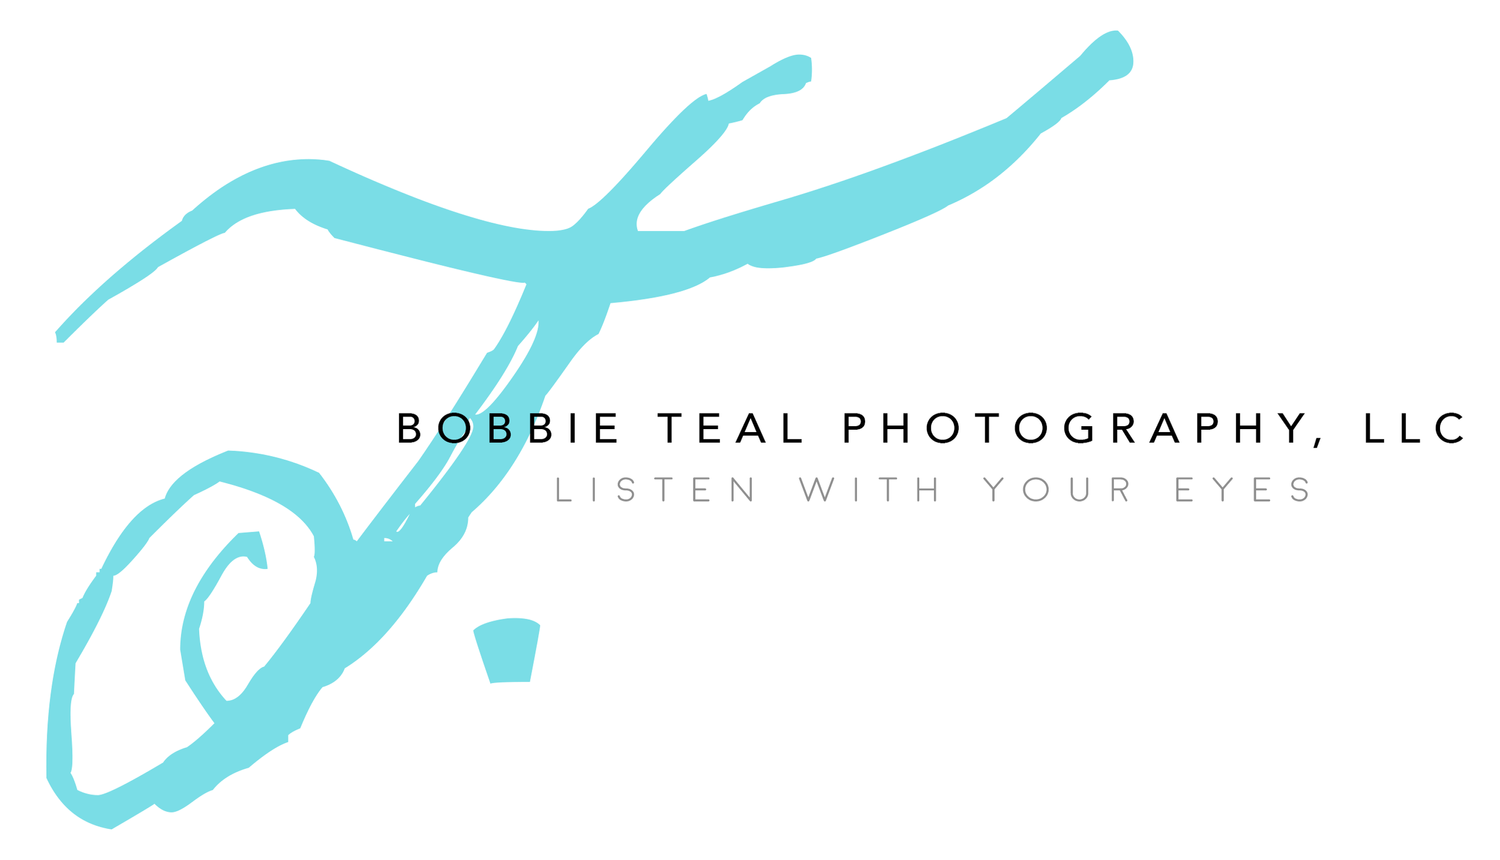 Bobbie Teal Photography, LLC